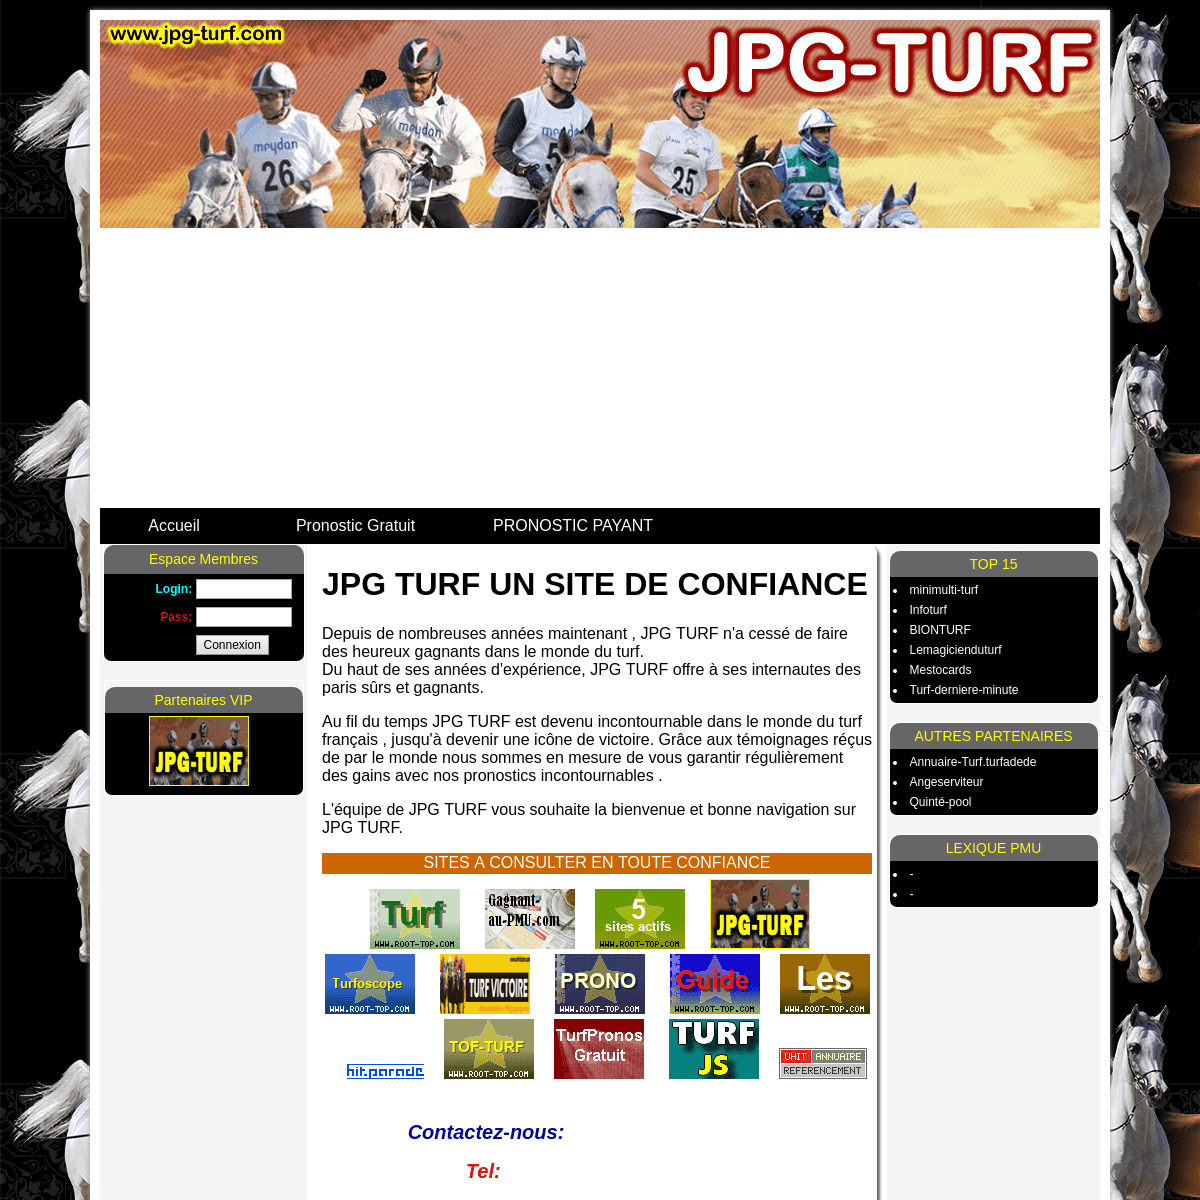 A complete backup of jpgturf.com